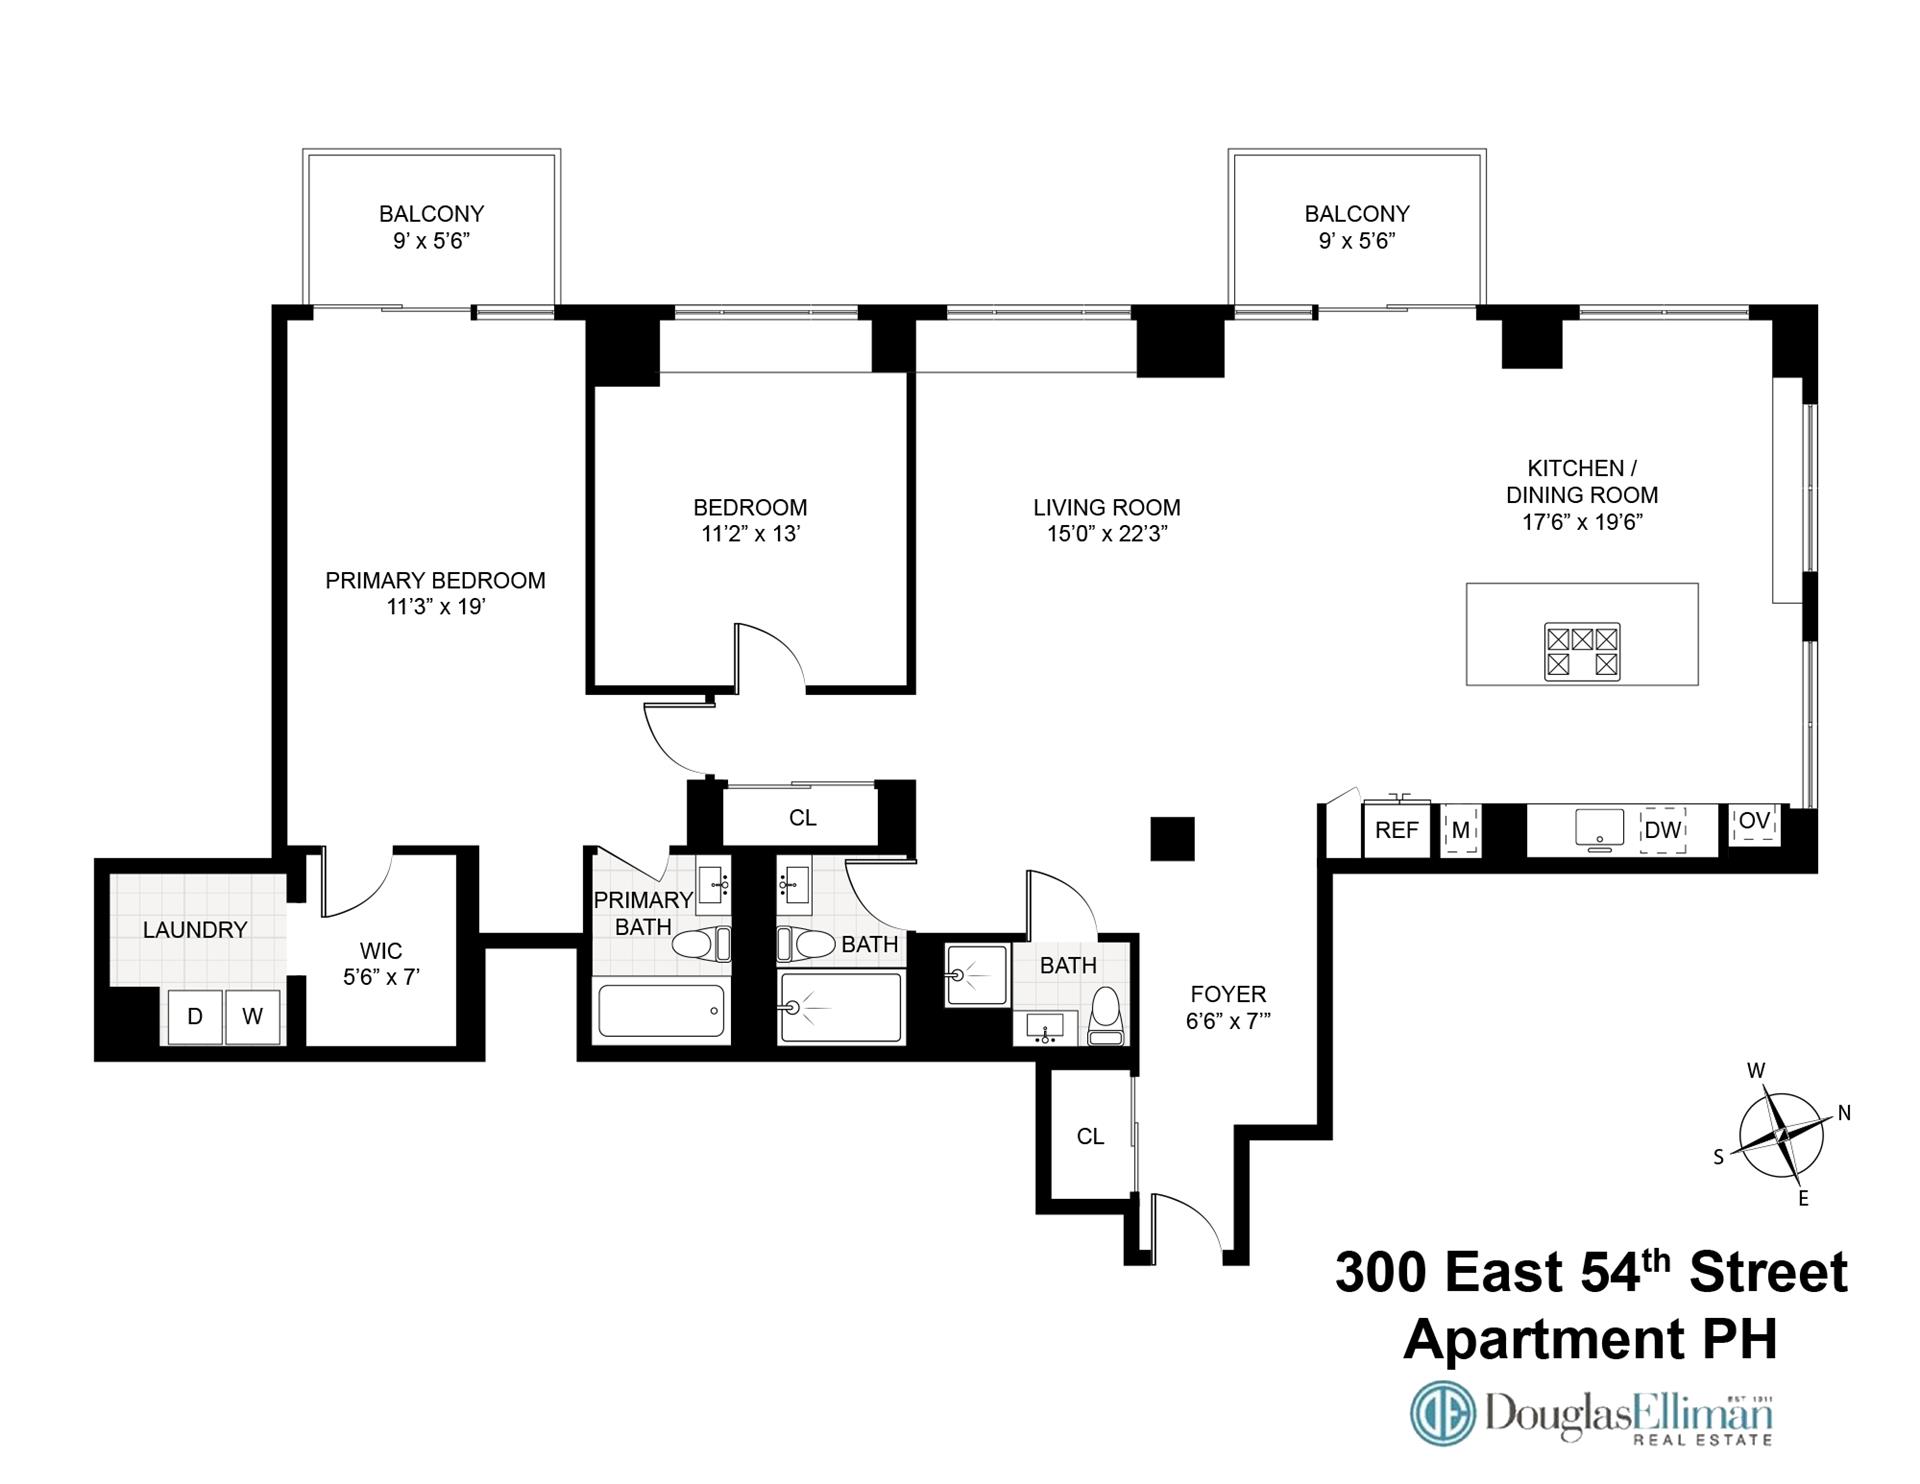 Floorplan for 300 East 54th Street, PHGH